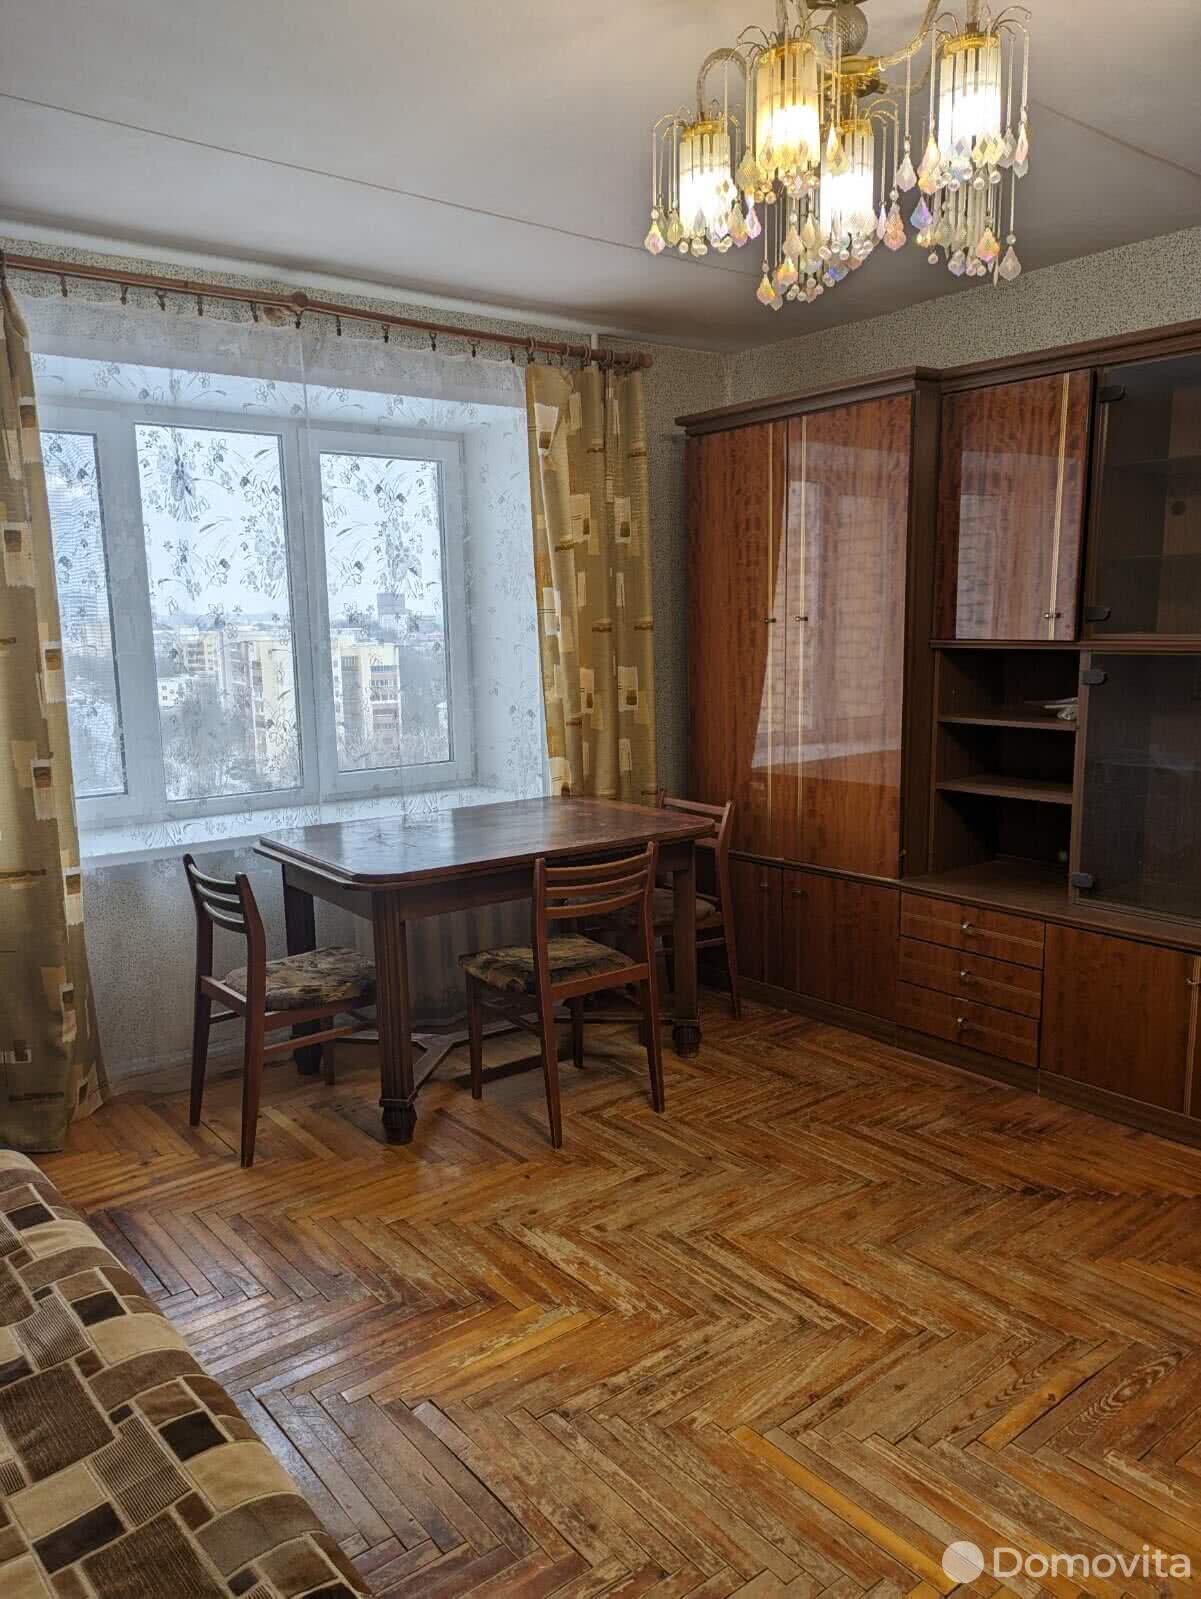 квартира, Минск, ул. Азгура, д. 5, стоимость продажи 278 549 р.